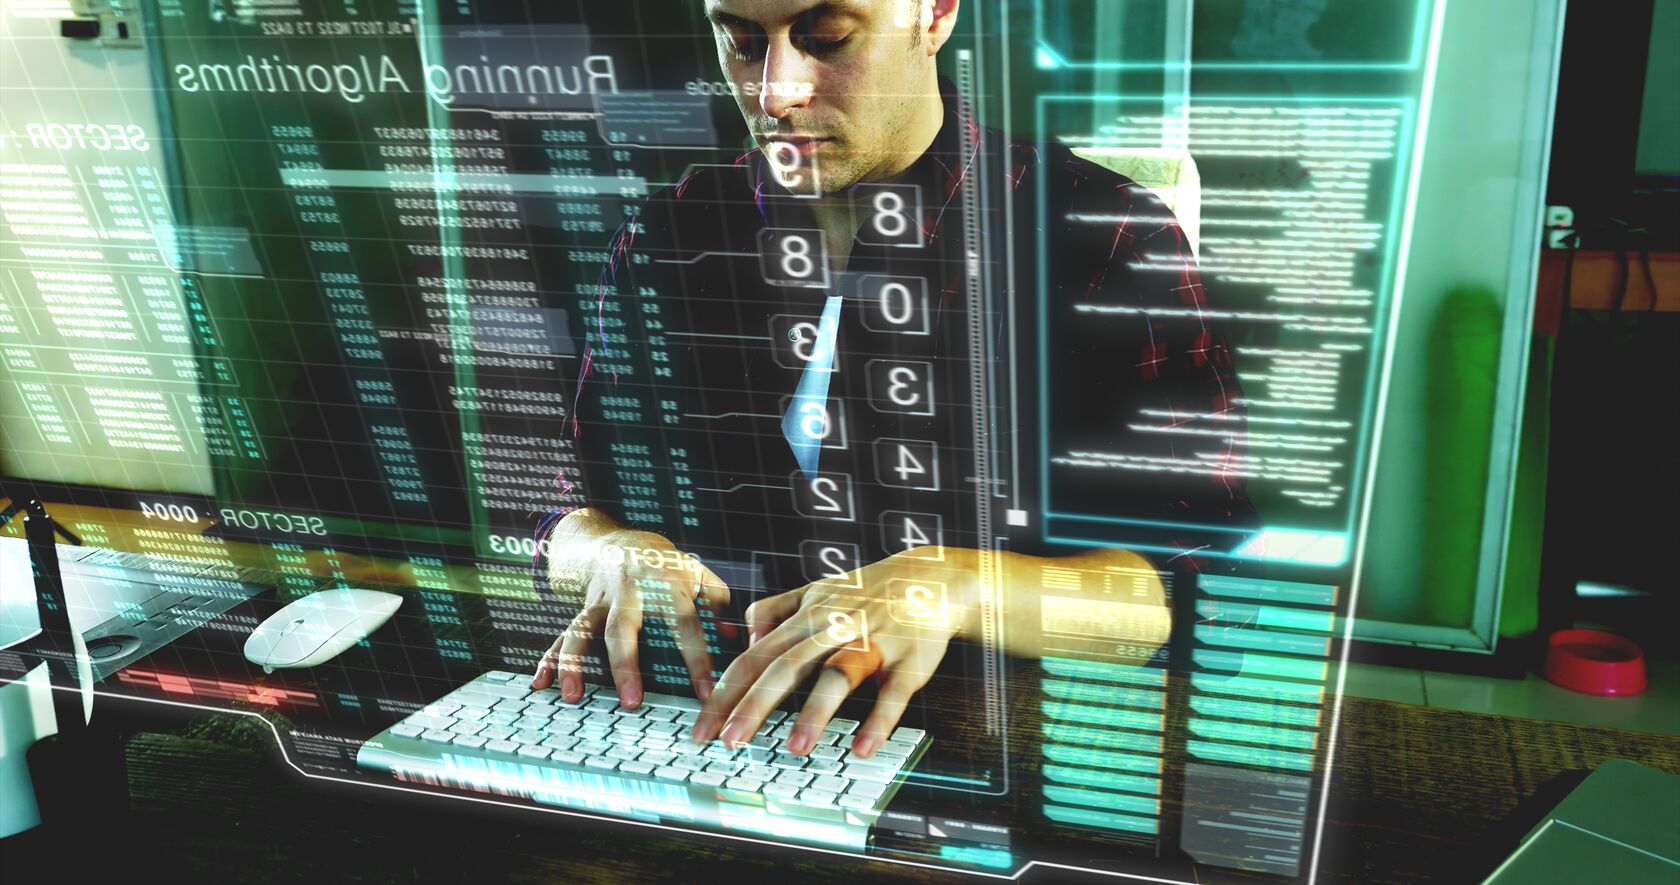 Computer user working